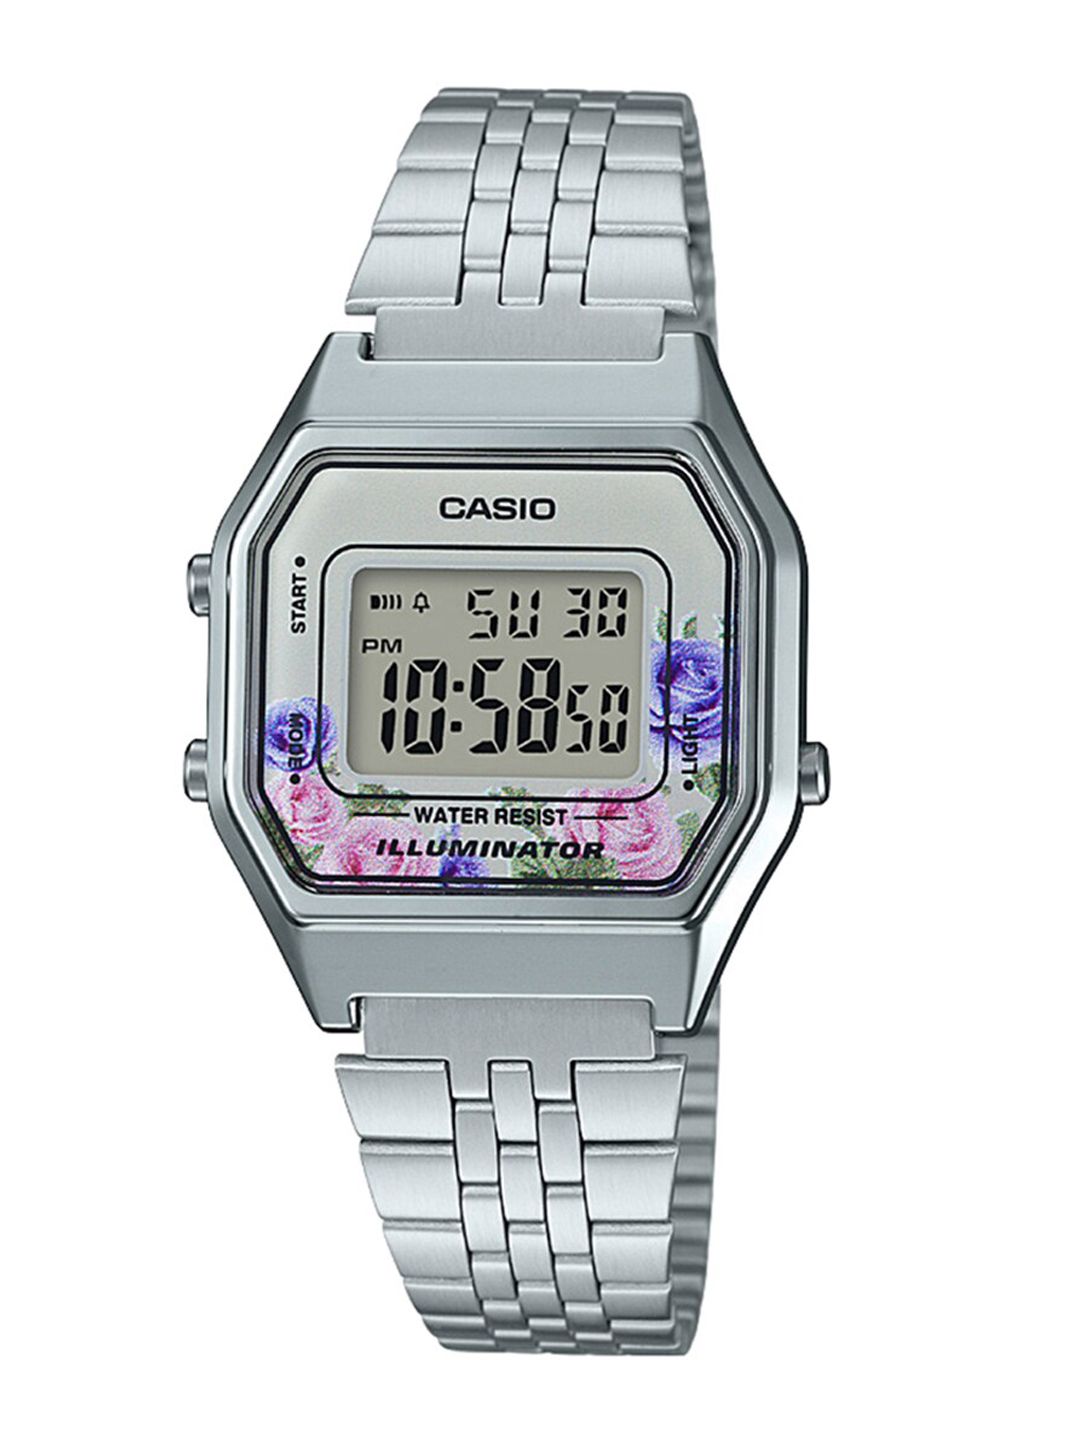 CASIO Unisex Silver-Toned Digital Watch D204 Price in India